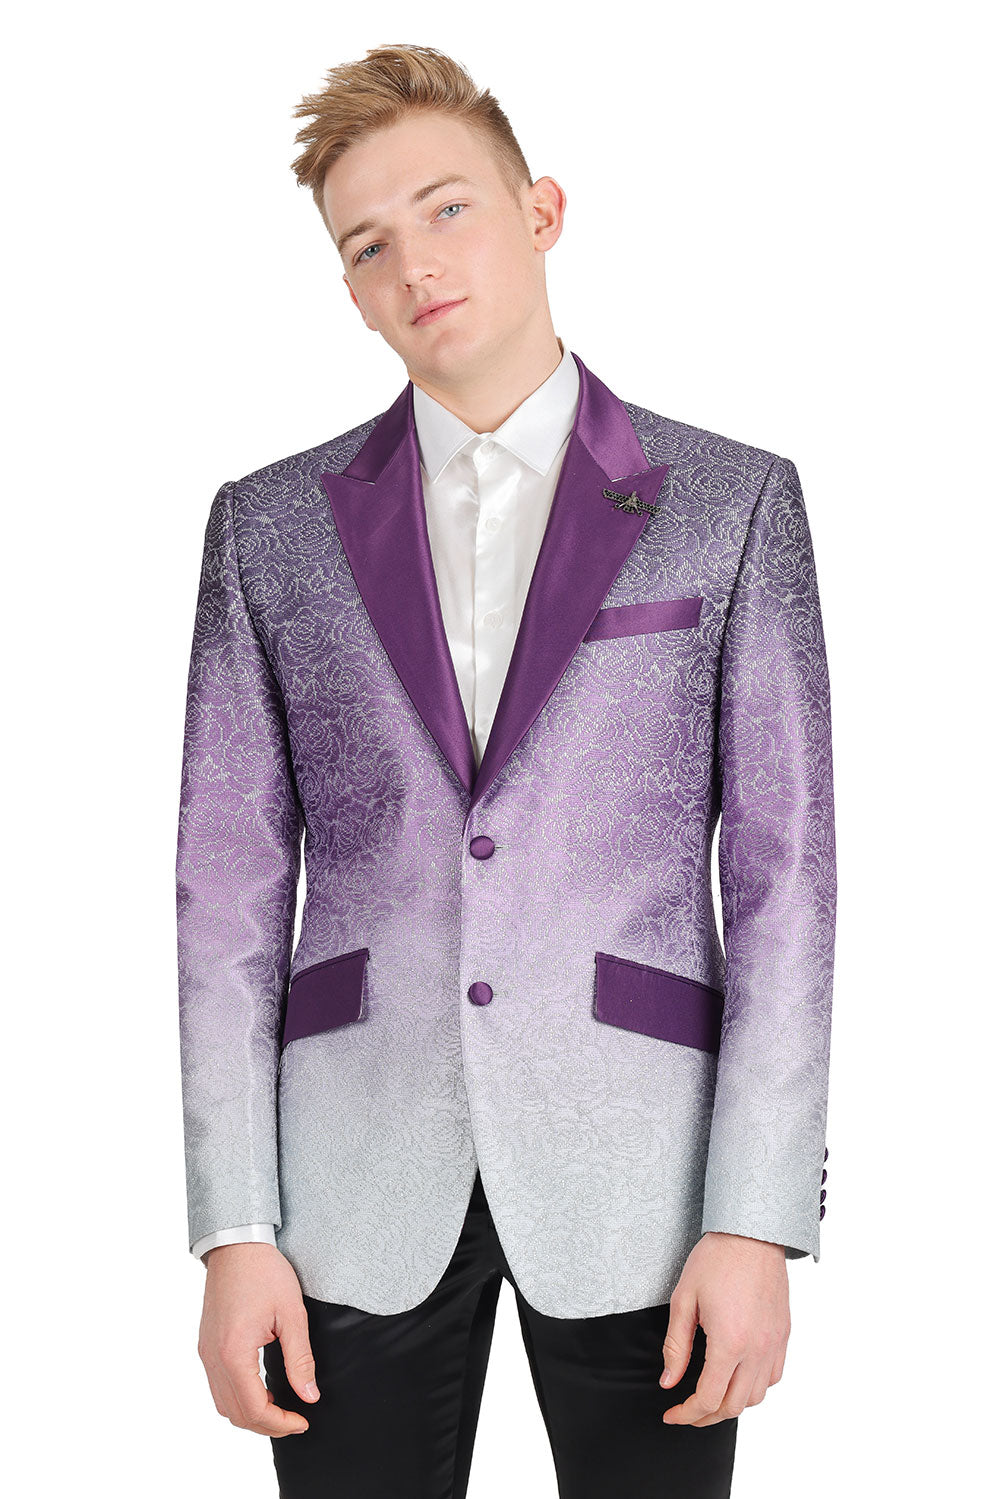 BARABAS Men's Two-Tone Floral Pattern Design Notched Blazer 3BL02 Purple